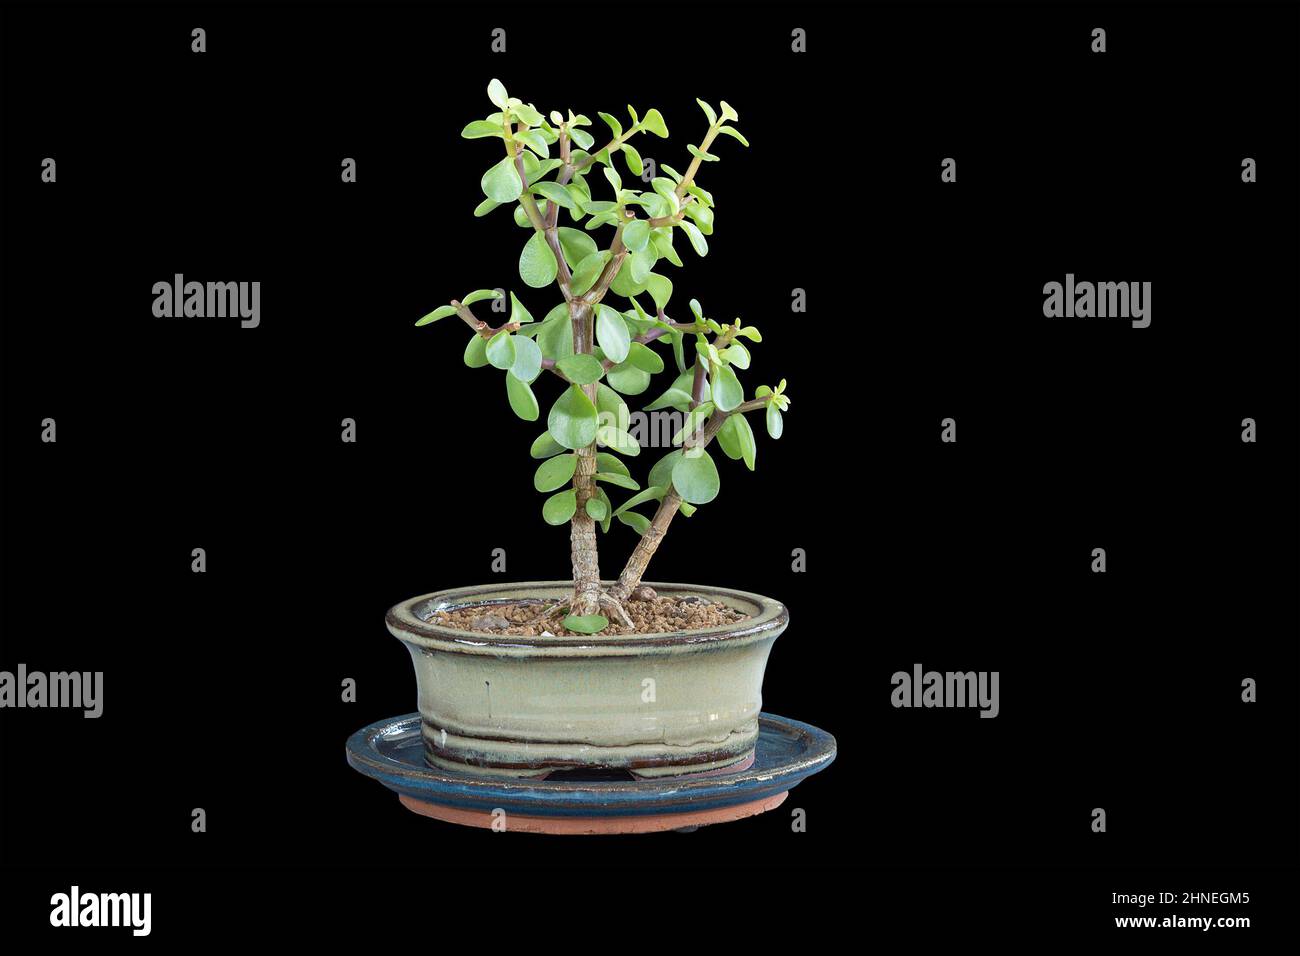 Portulacaria afra Bonsai joven aislado sobre fondo oscuro, pequeño árbol plantado en una olla china cerámica Foto de stock